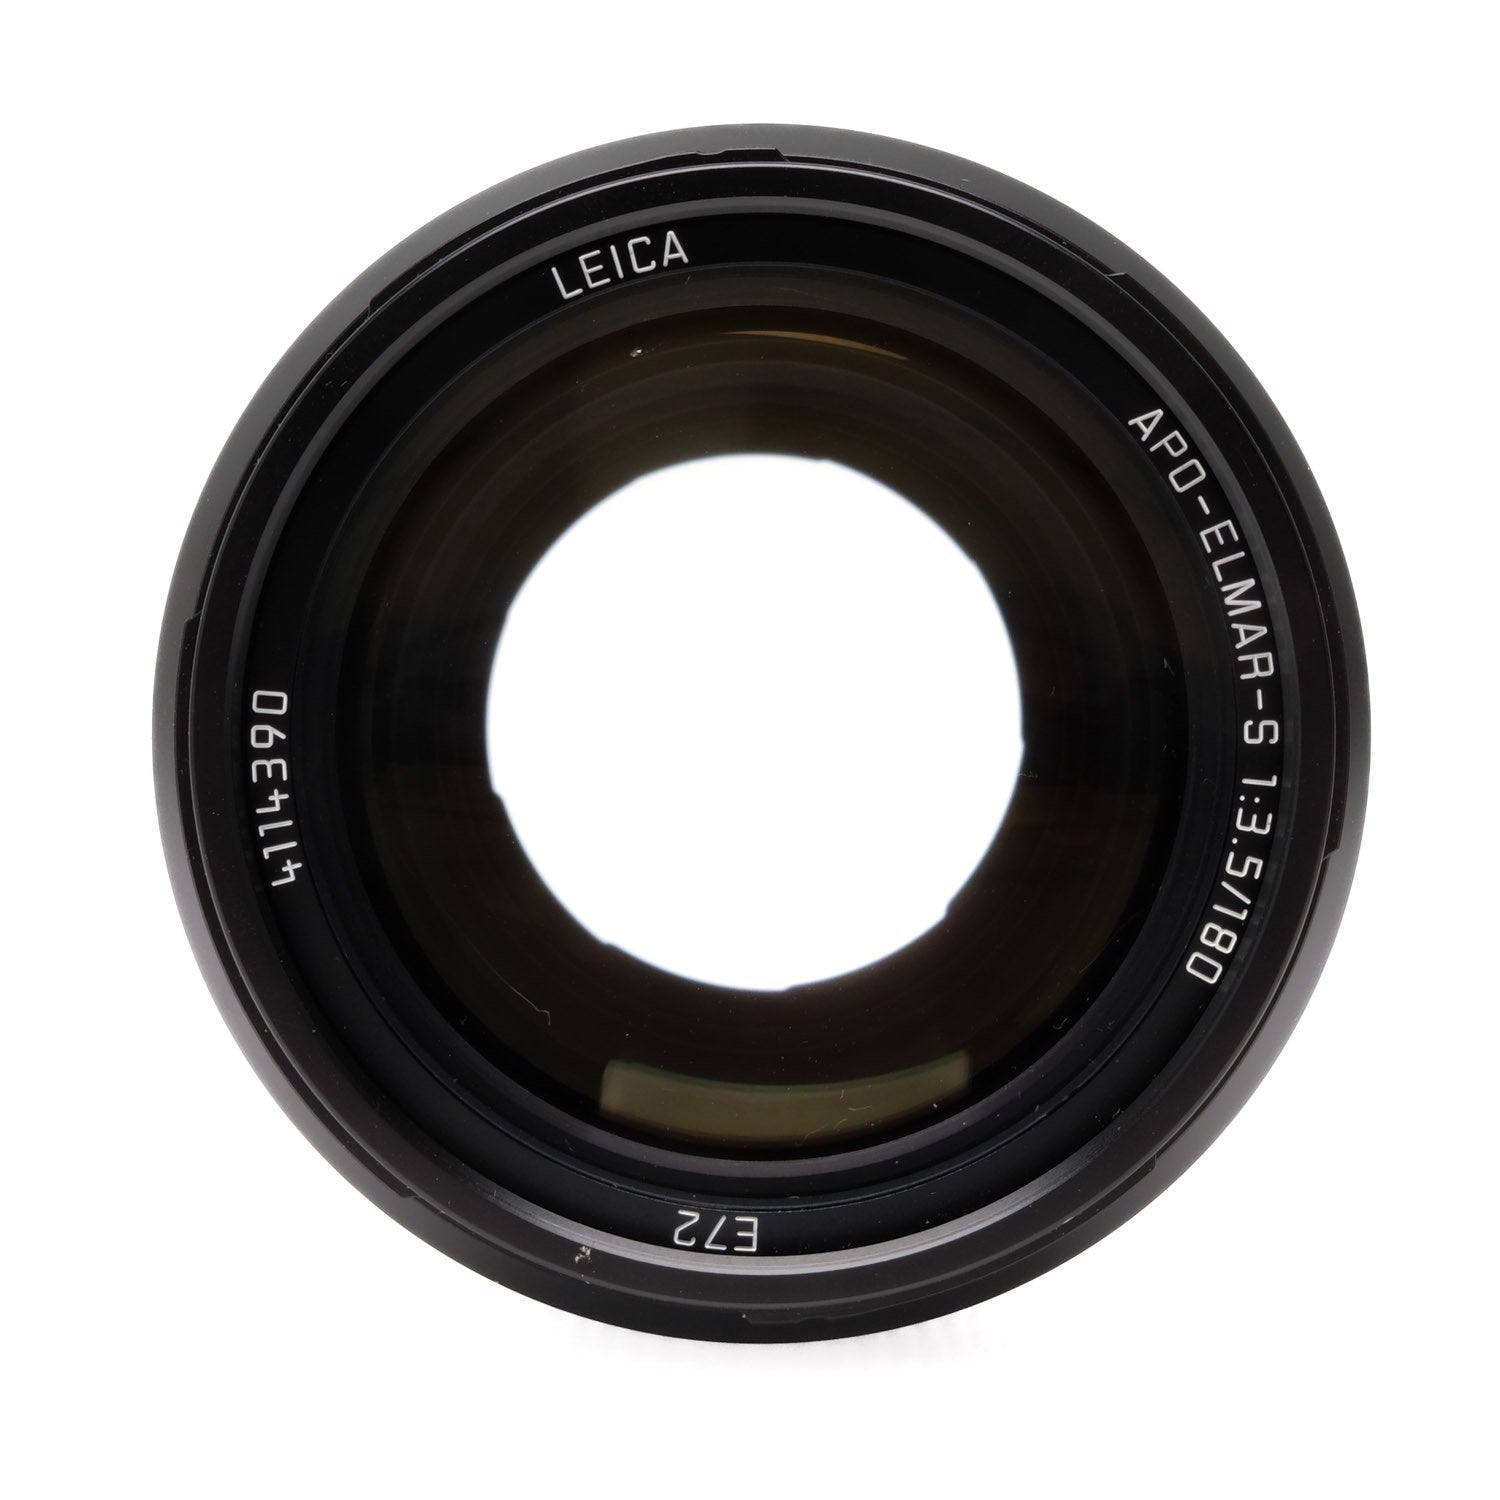 Leica S 180mm f3.5 APO, Boxed w/ Warranty 4114390